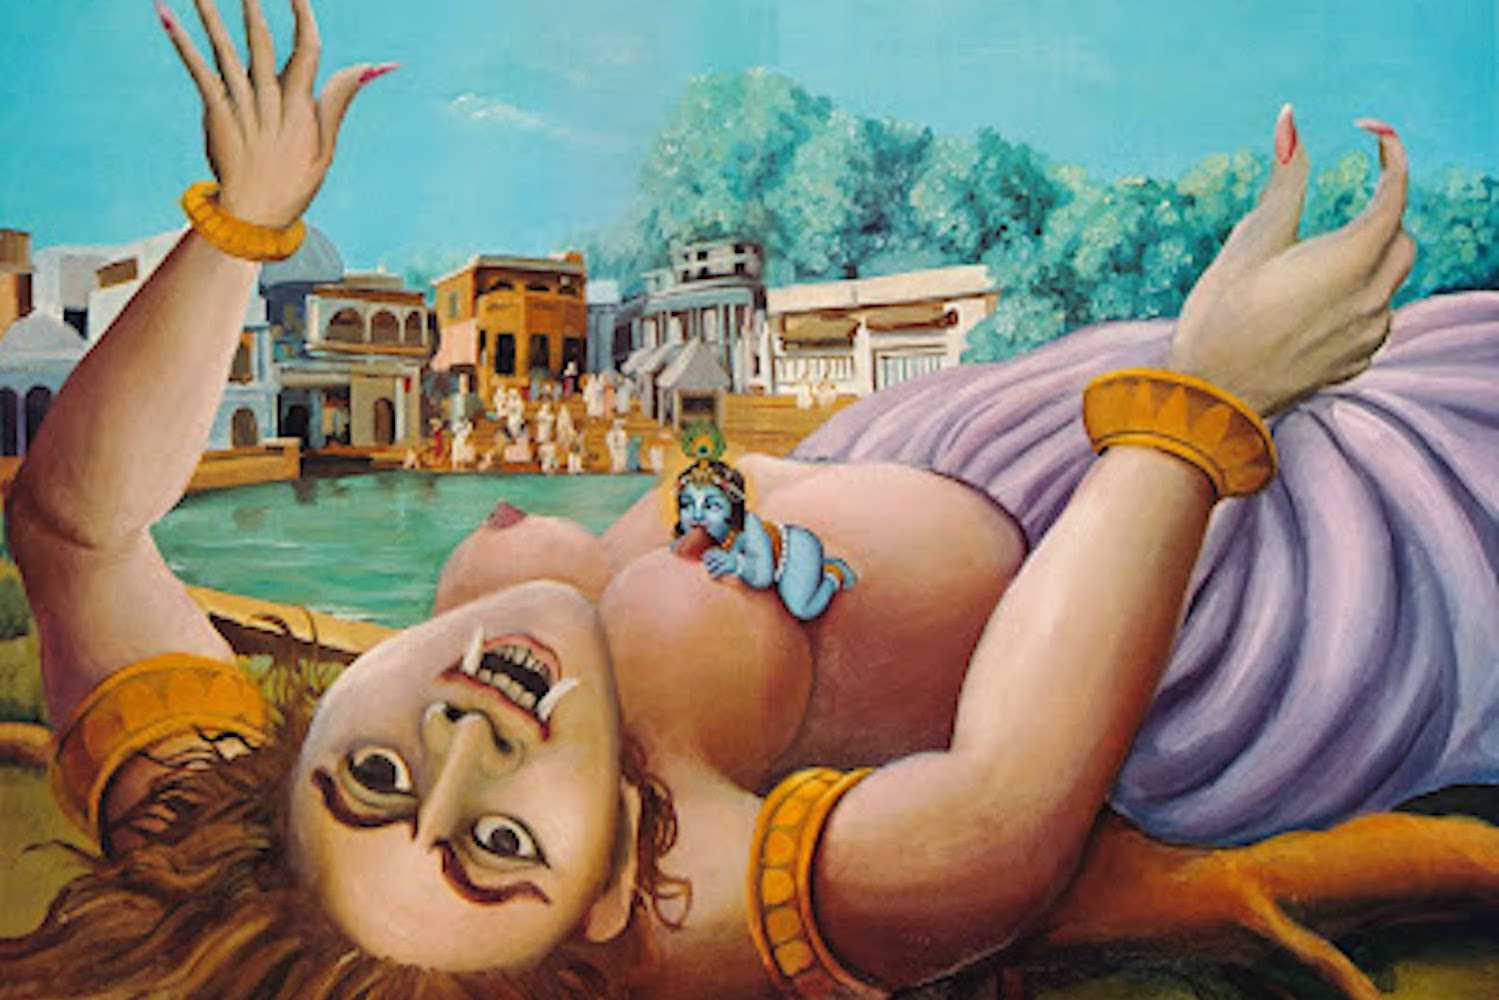 The Death of Putana and lord Krishna